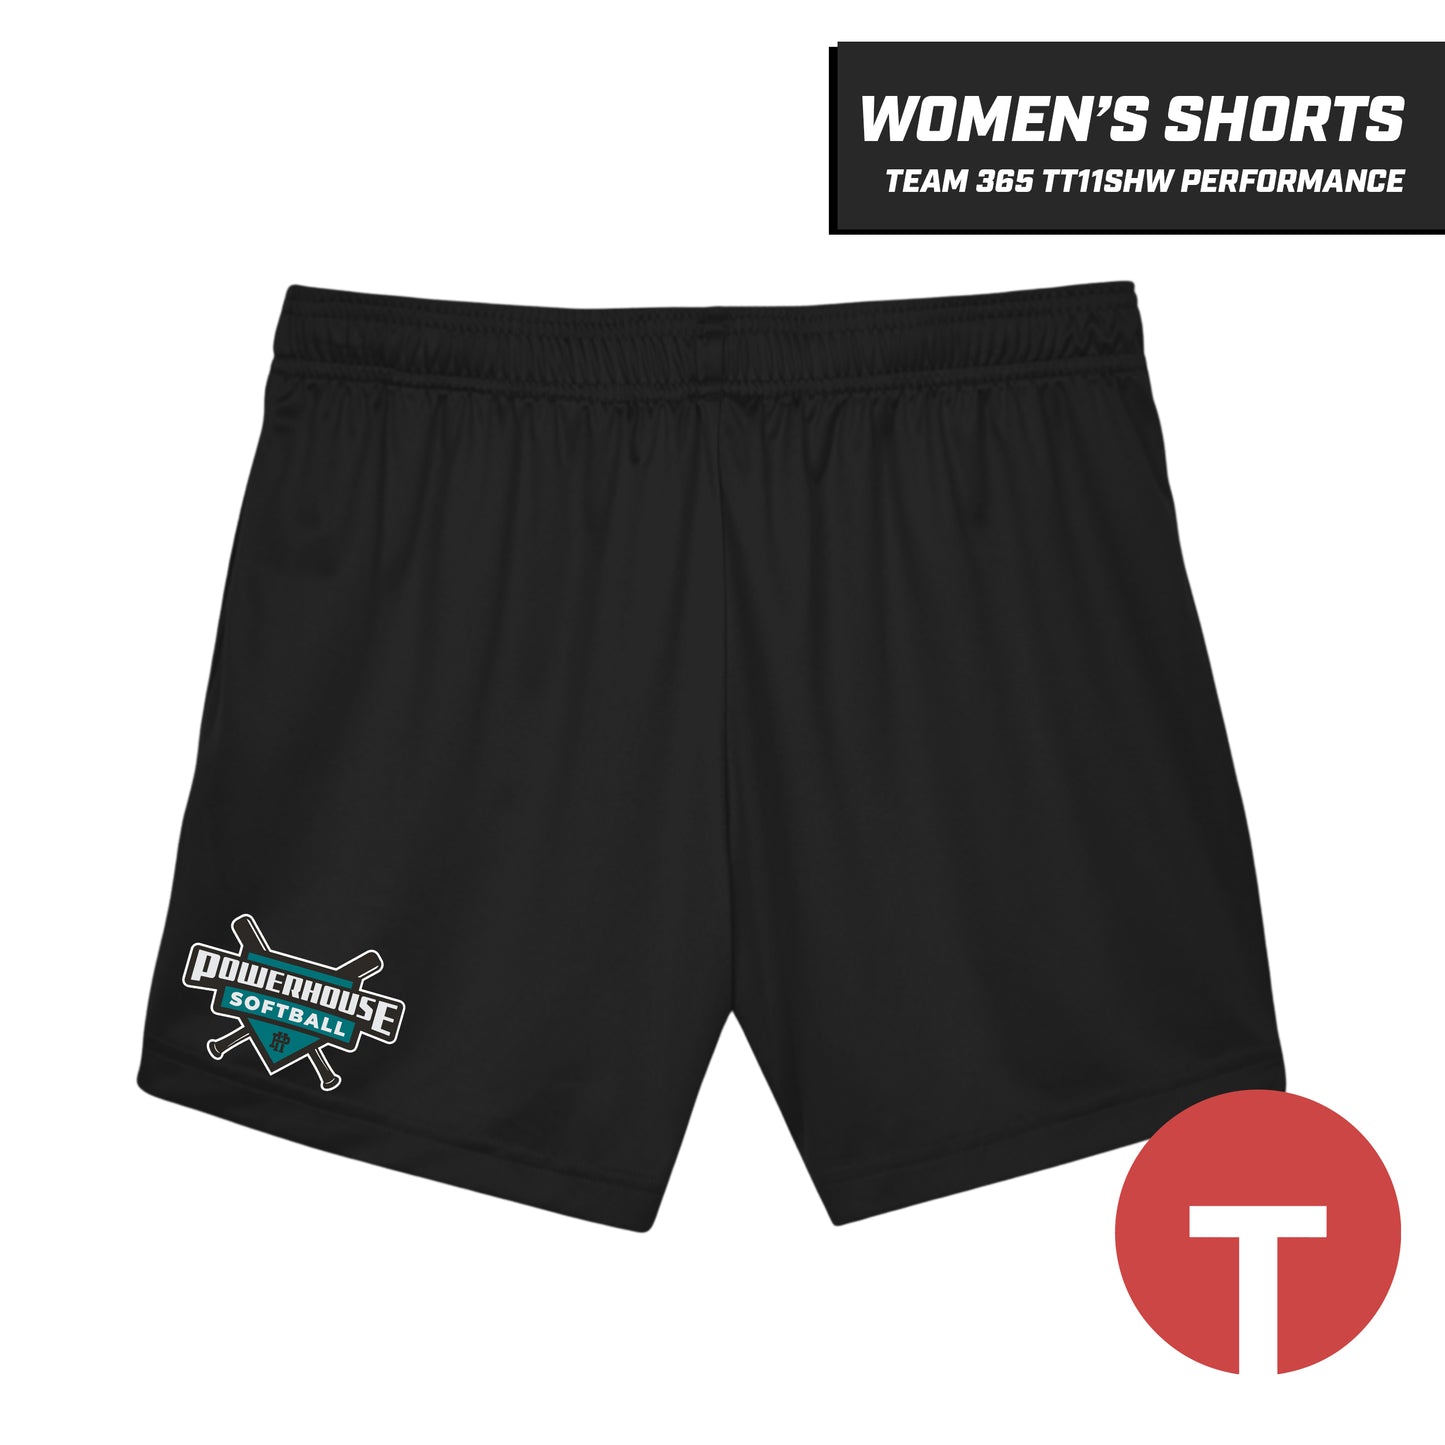 Powerhouse Softball - Women's Performance Shorts - Team 365 TT11SHW